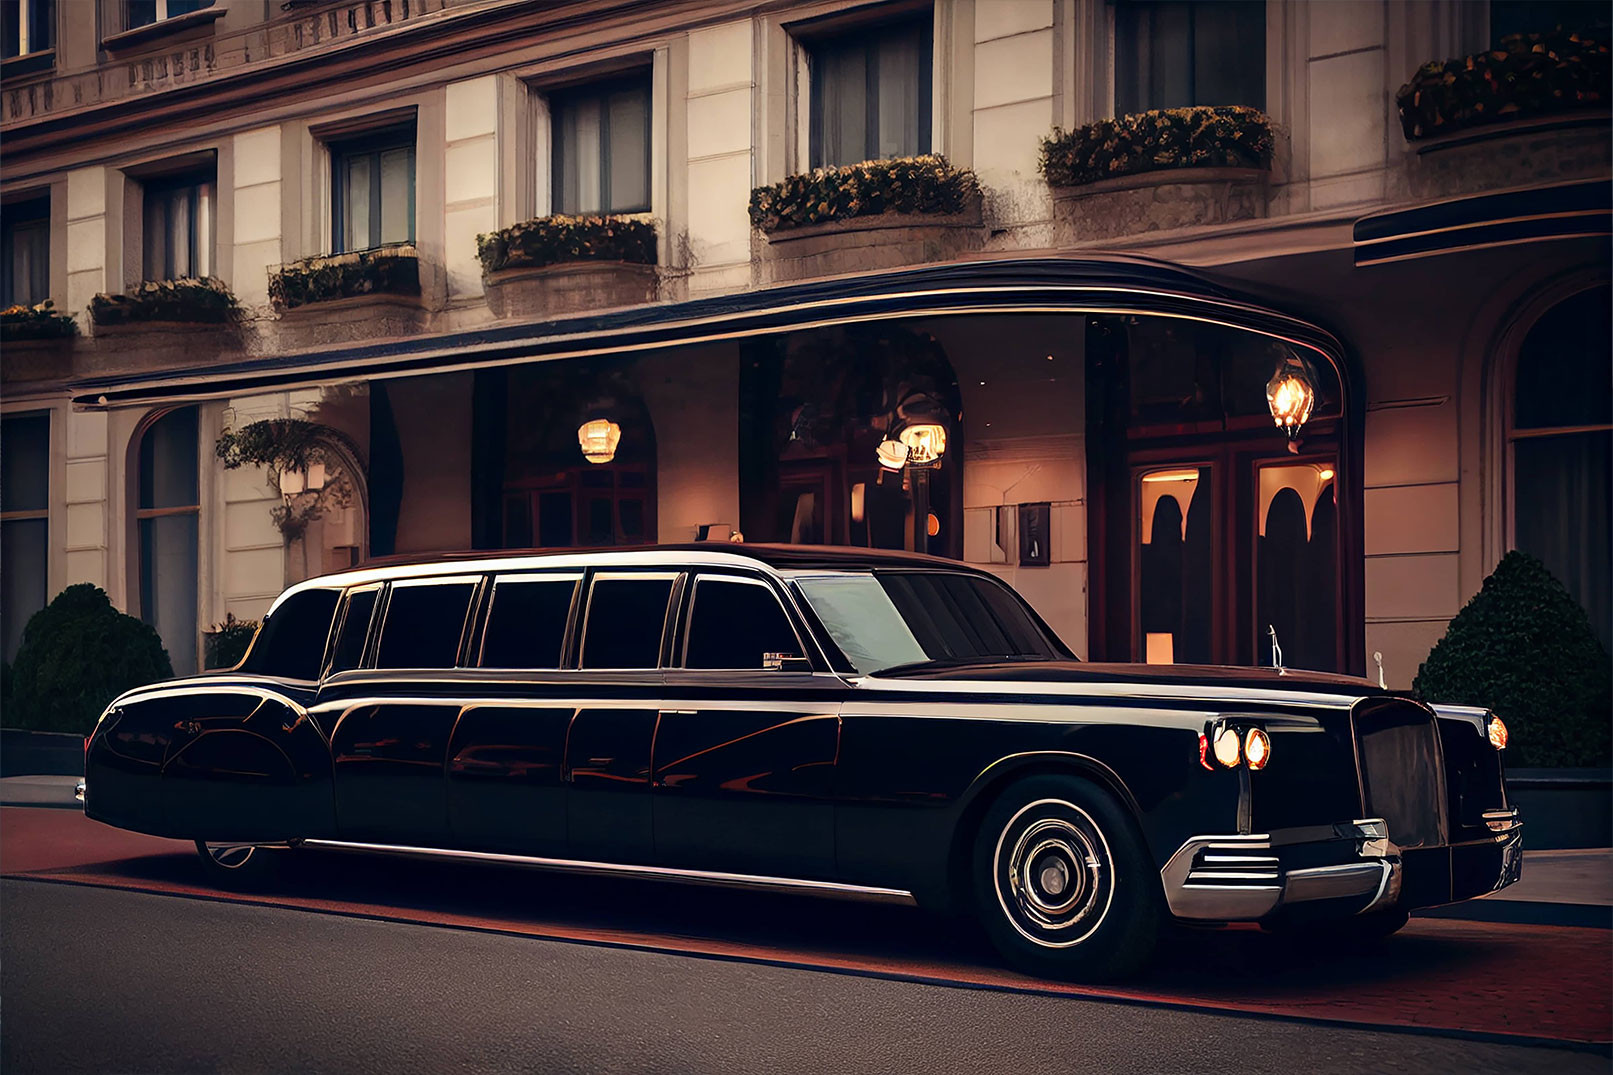 Convention Travel with ABA Unique Limousine luxury fleet